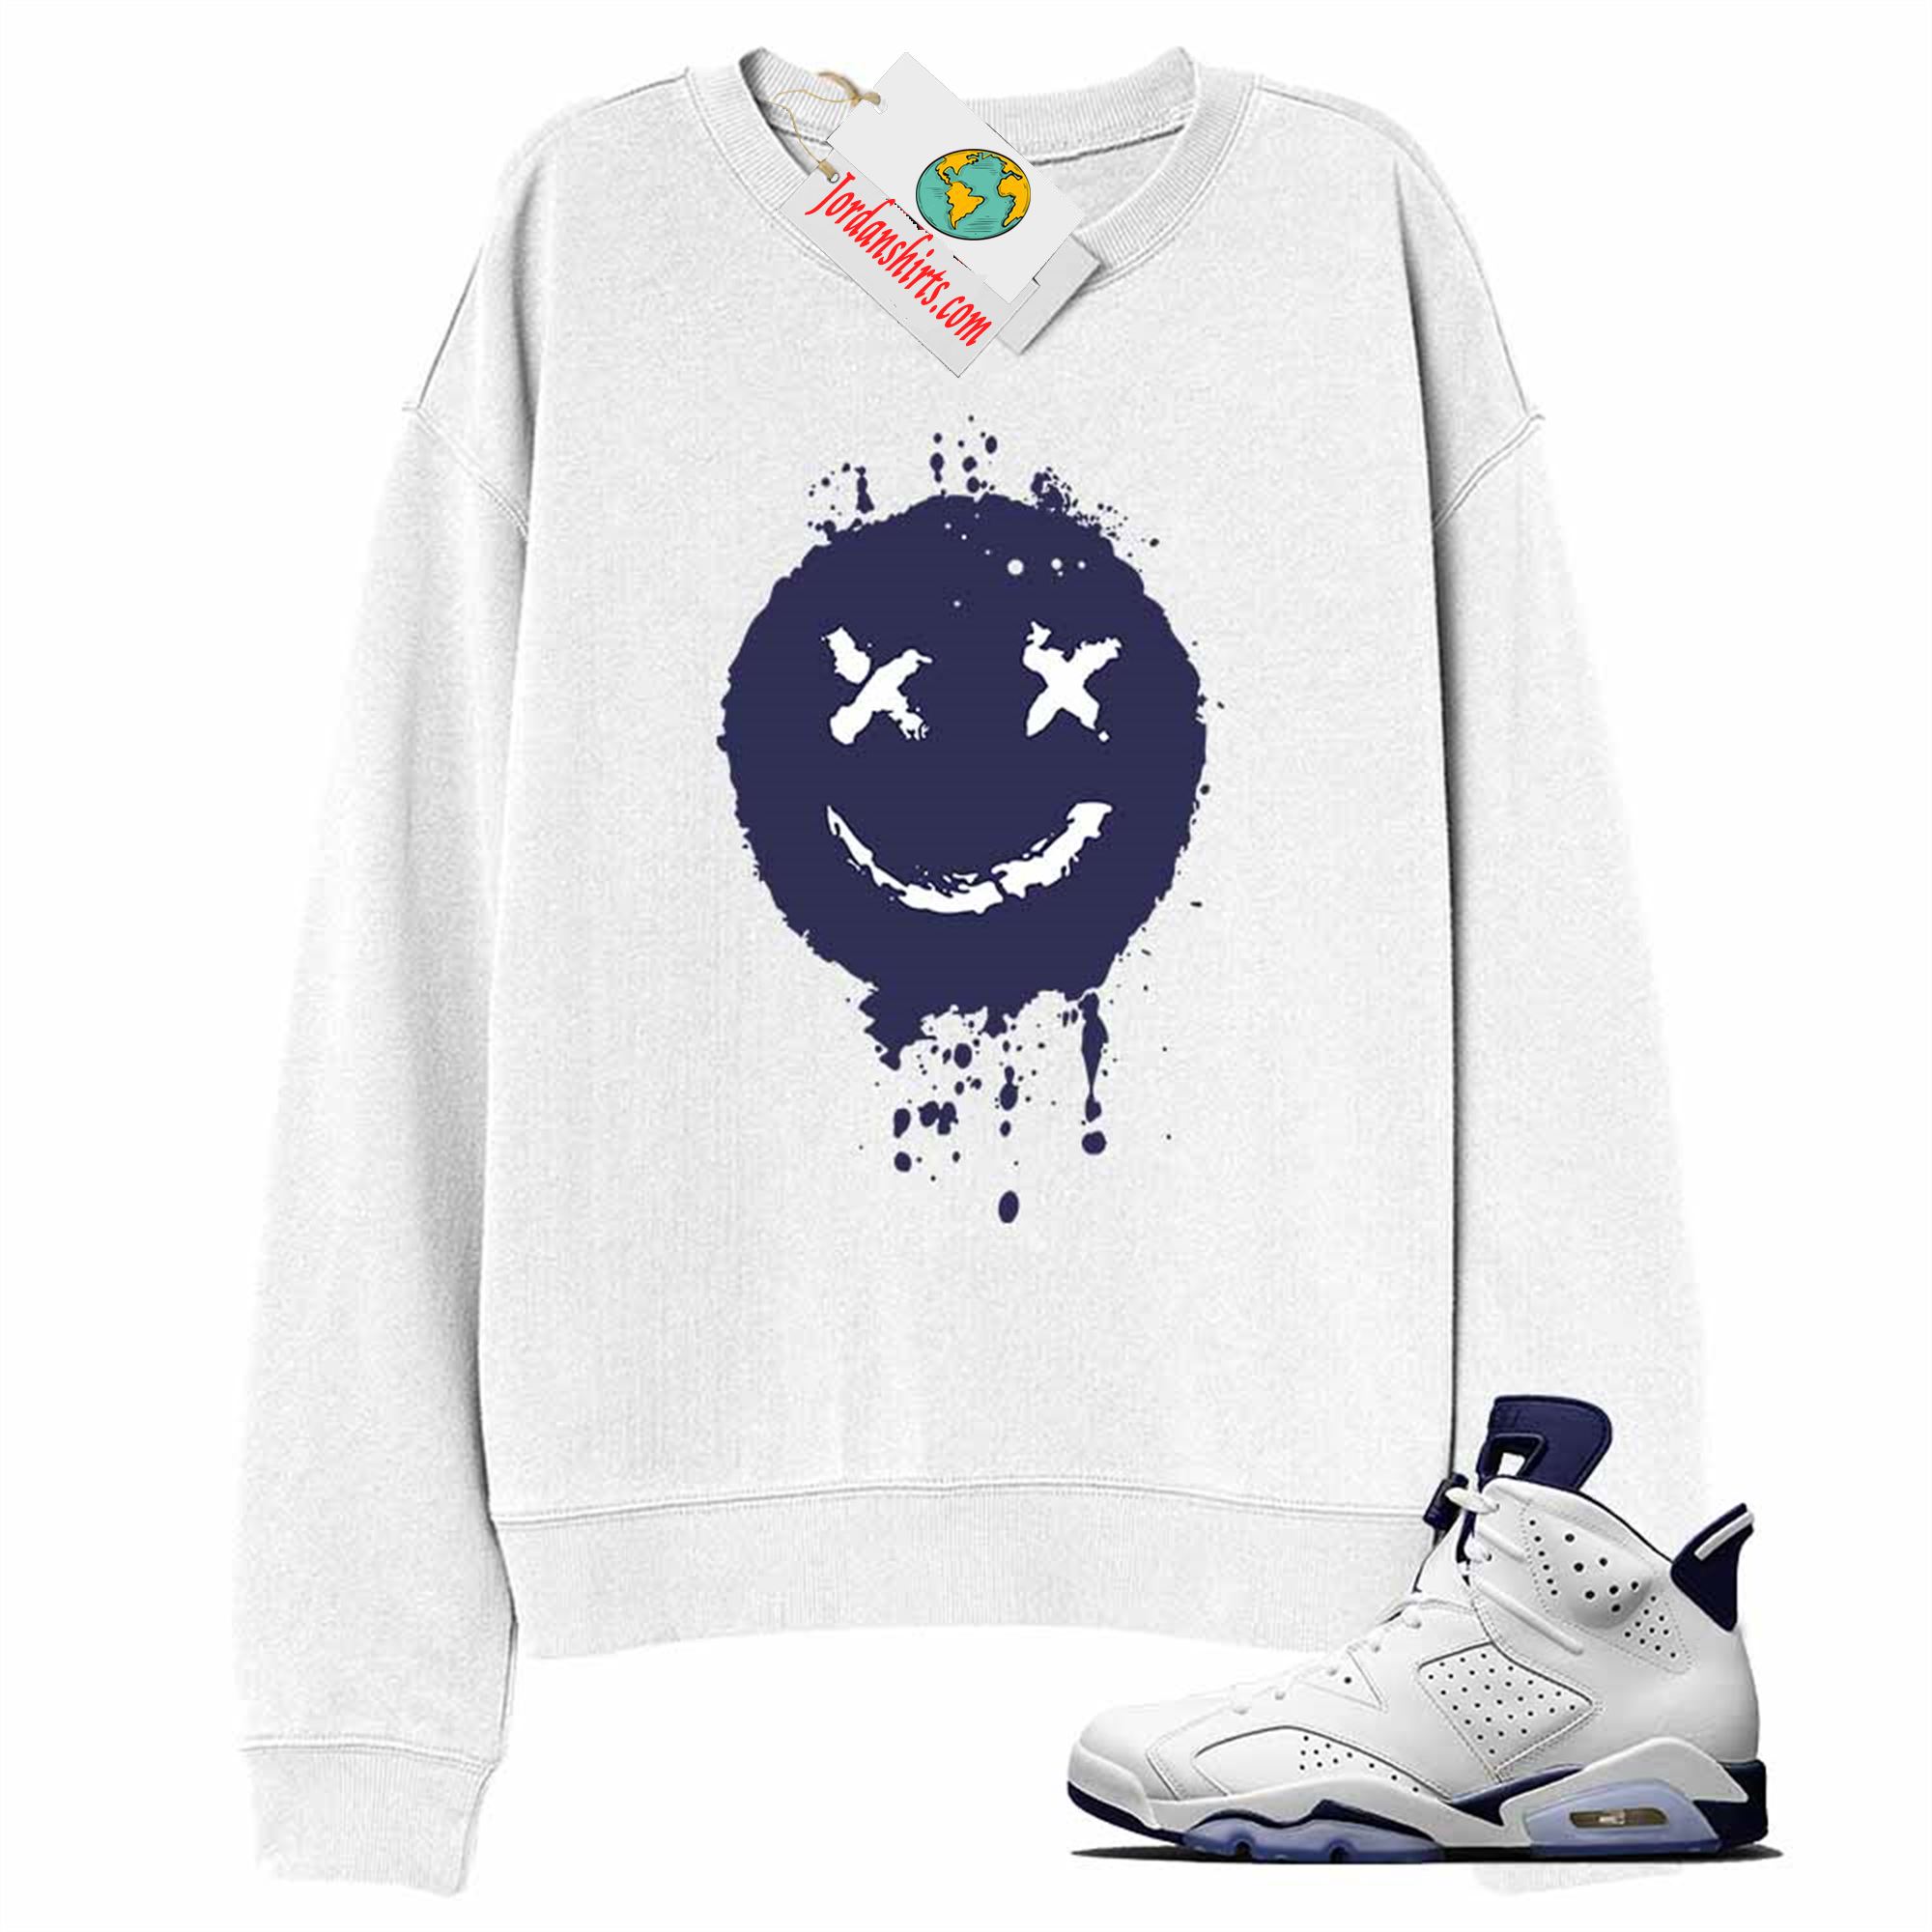 Jordan 6 Sweatshirt, Smile Happy Face White Sweatshirt Air Jordan 6 Midnight Navy 6s Size Up To 5xl